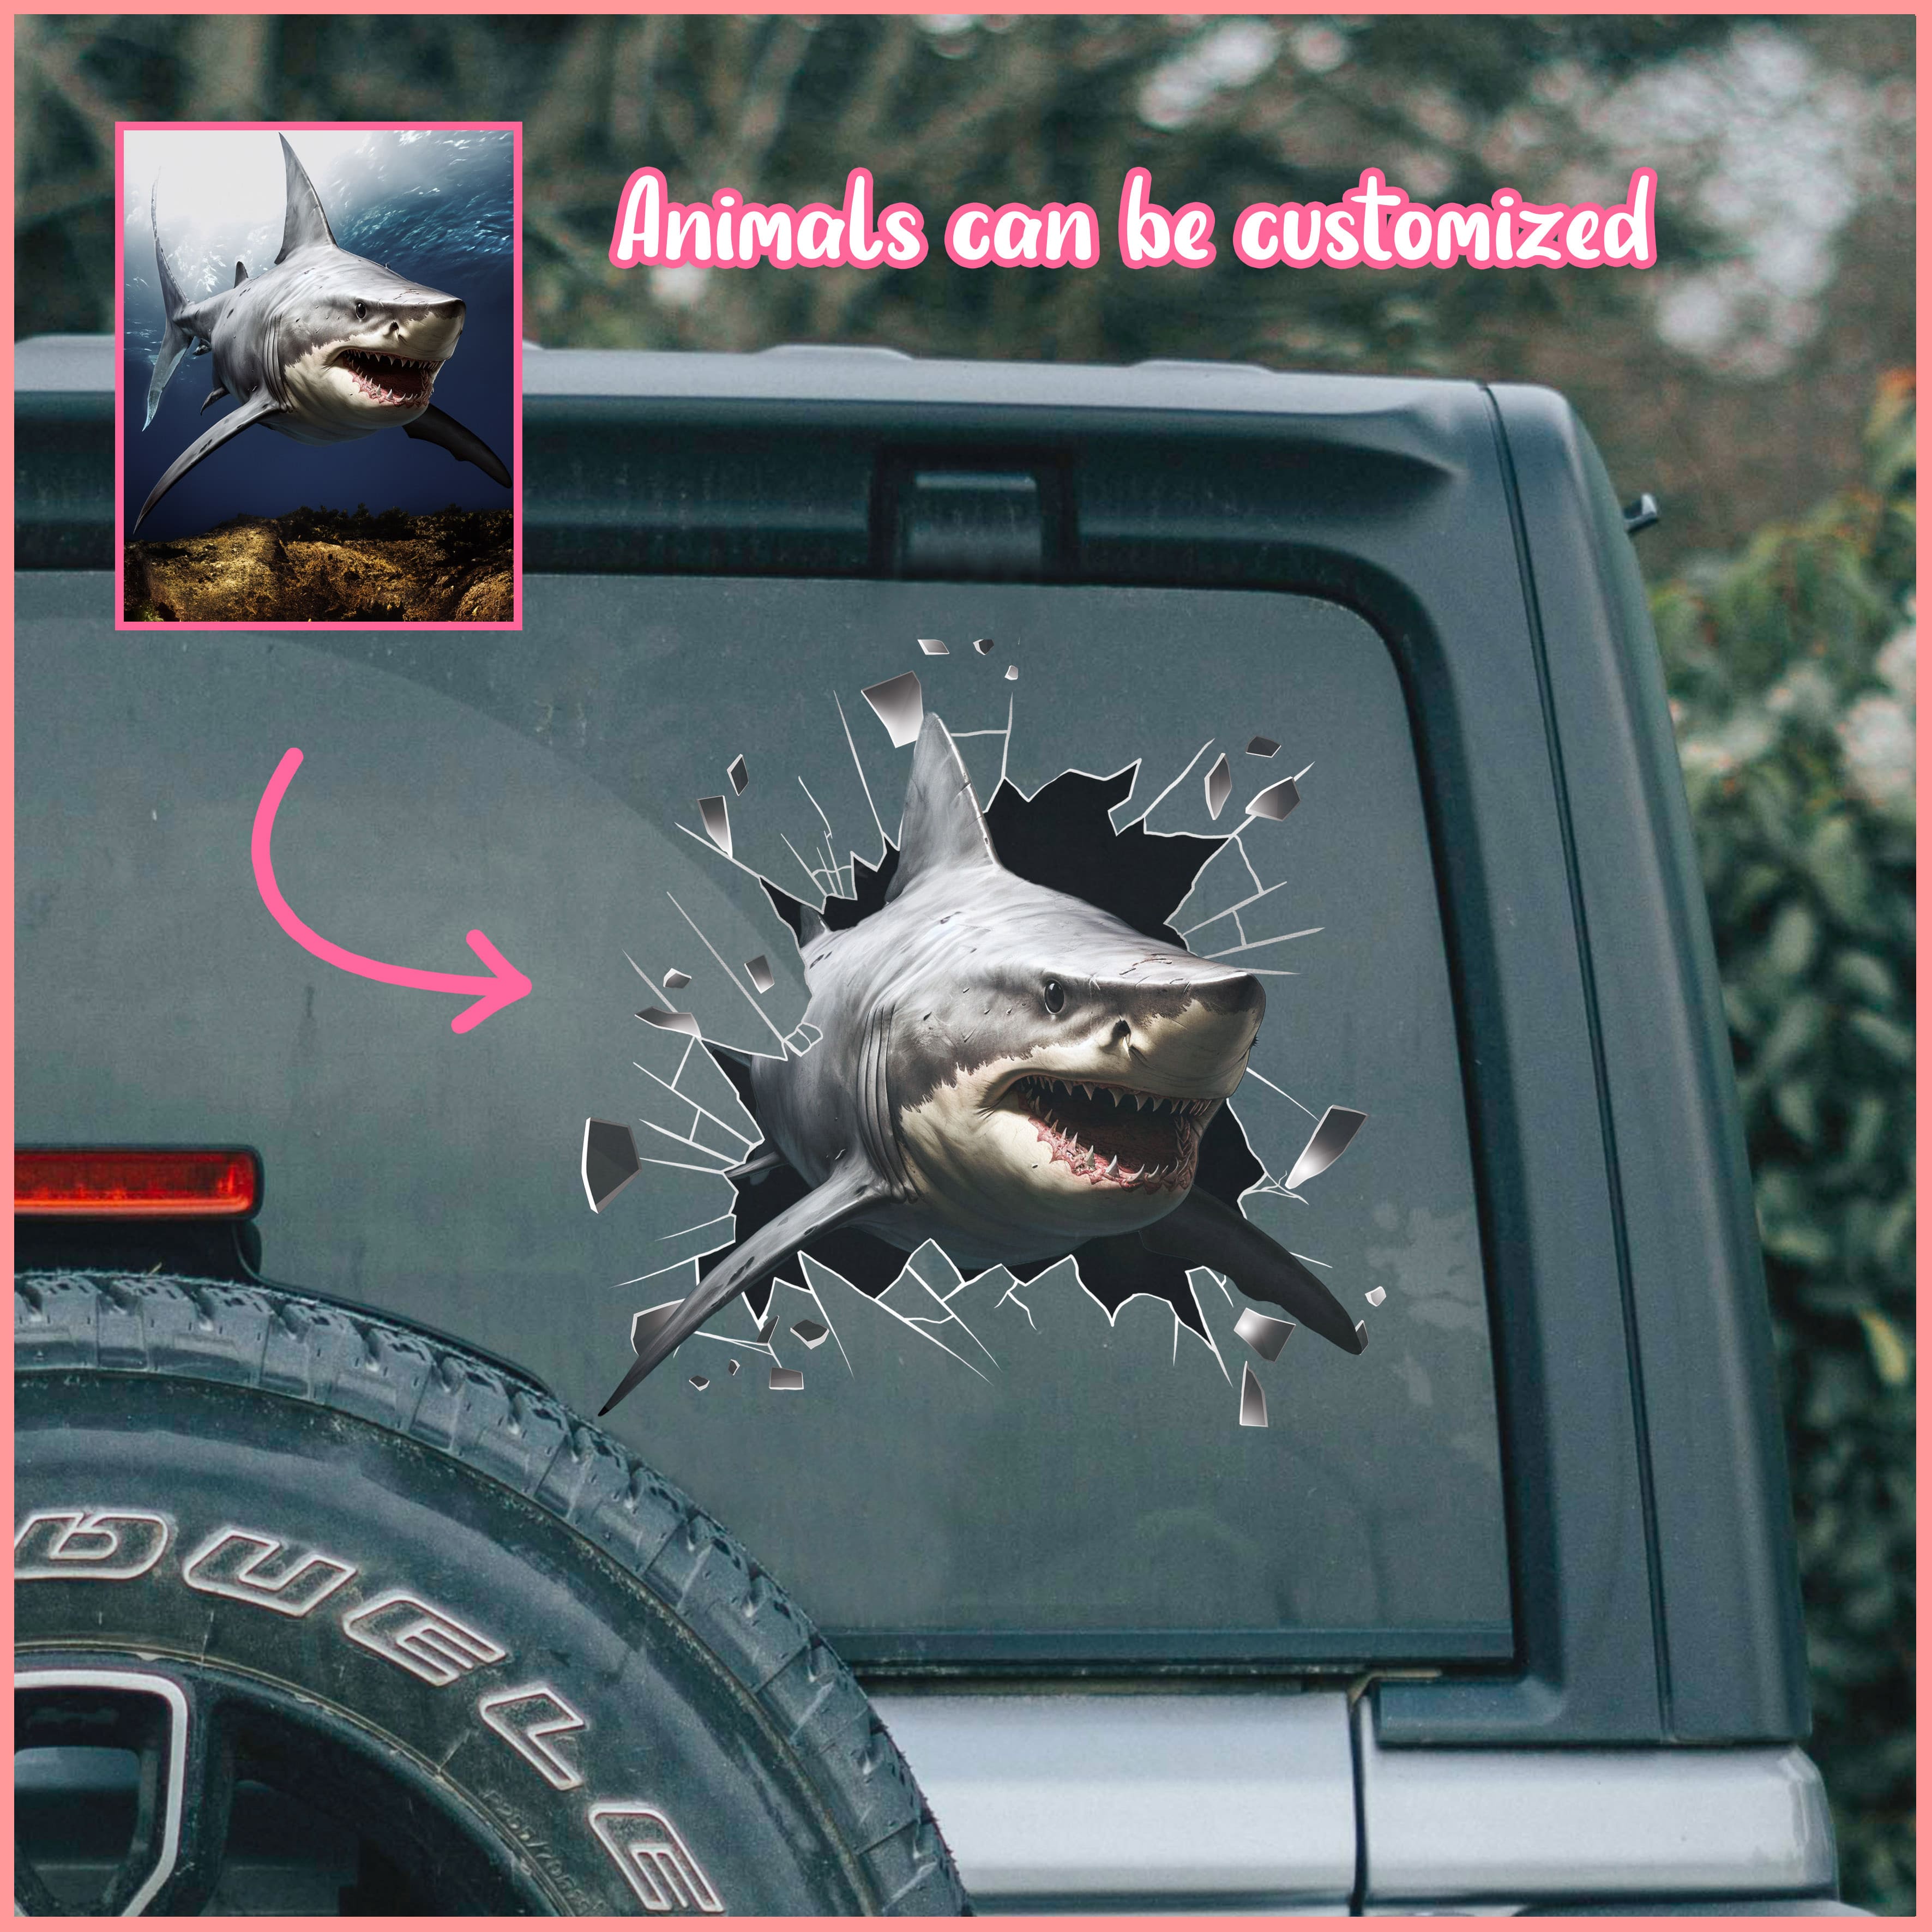 Shark car decal, Animals can be customized